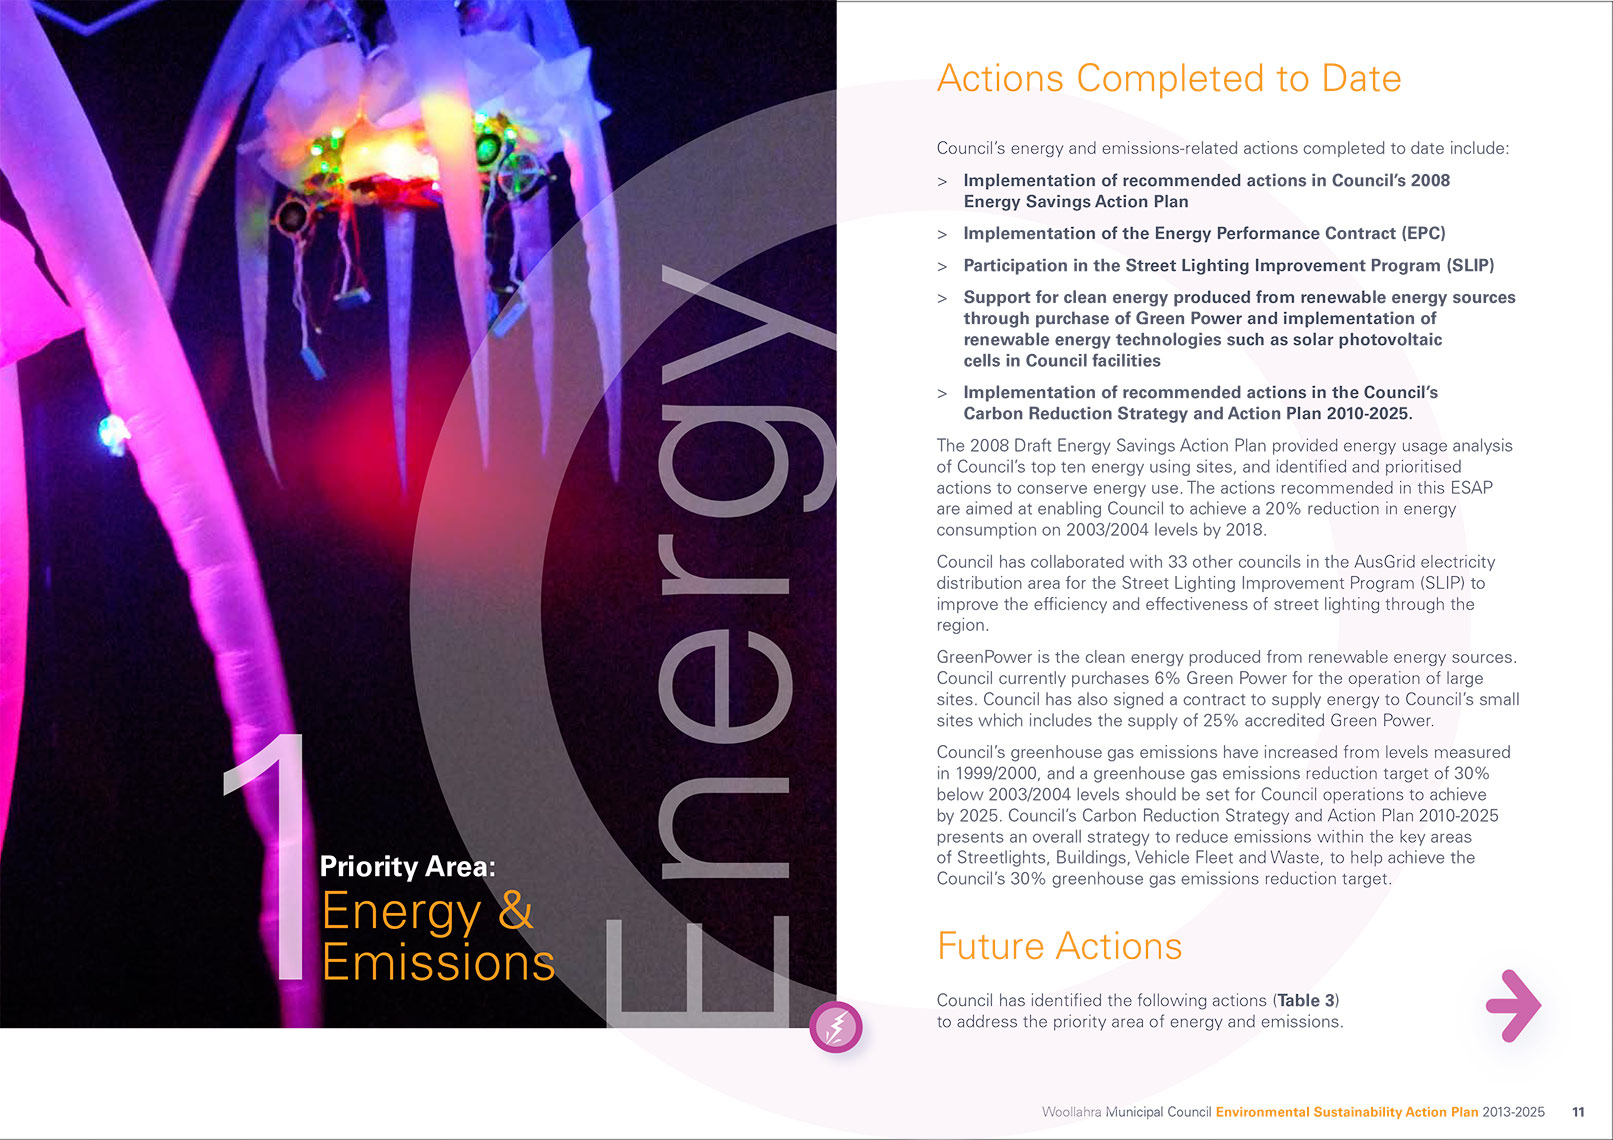 p11 Woollahra_ESAP (cover) Sustainable environmental communication design